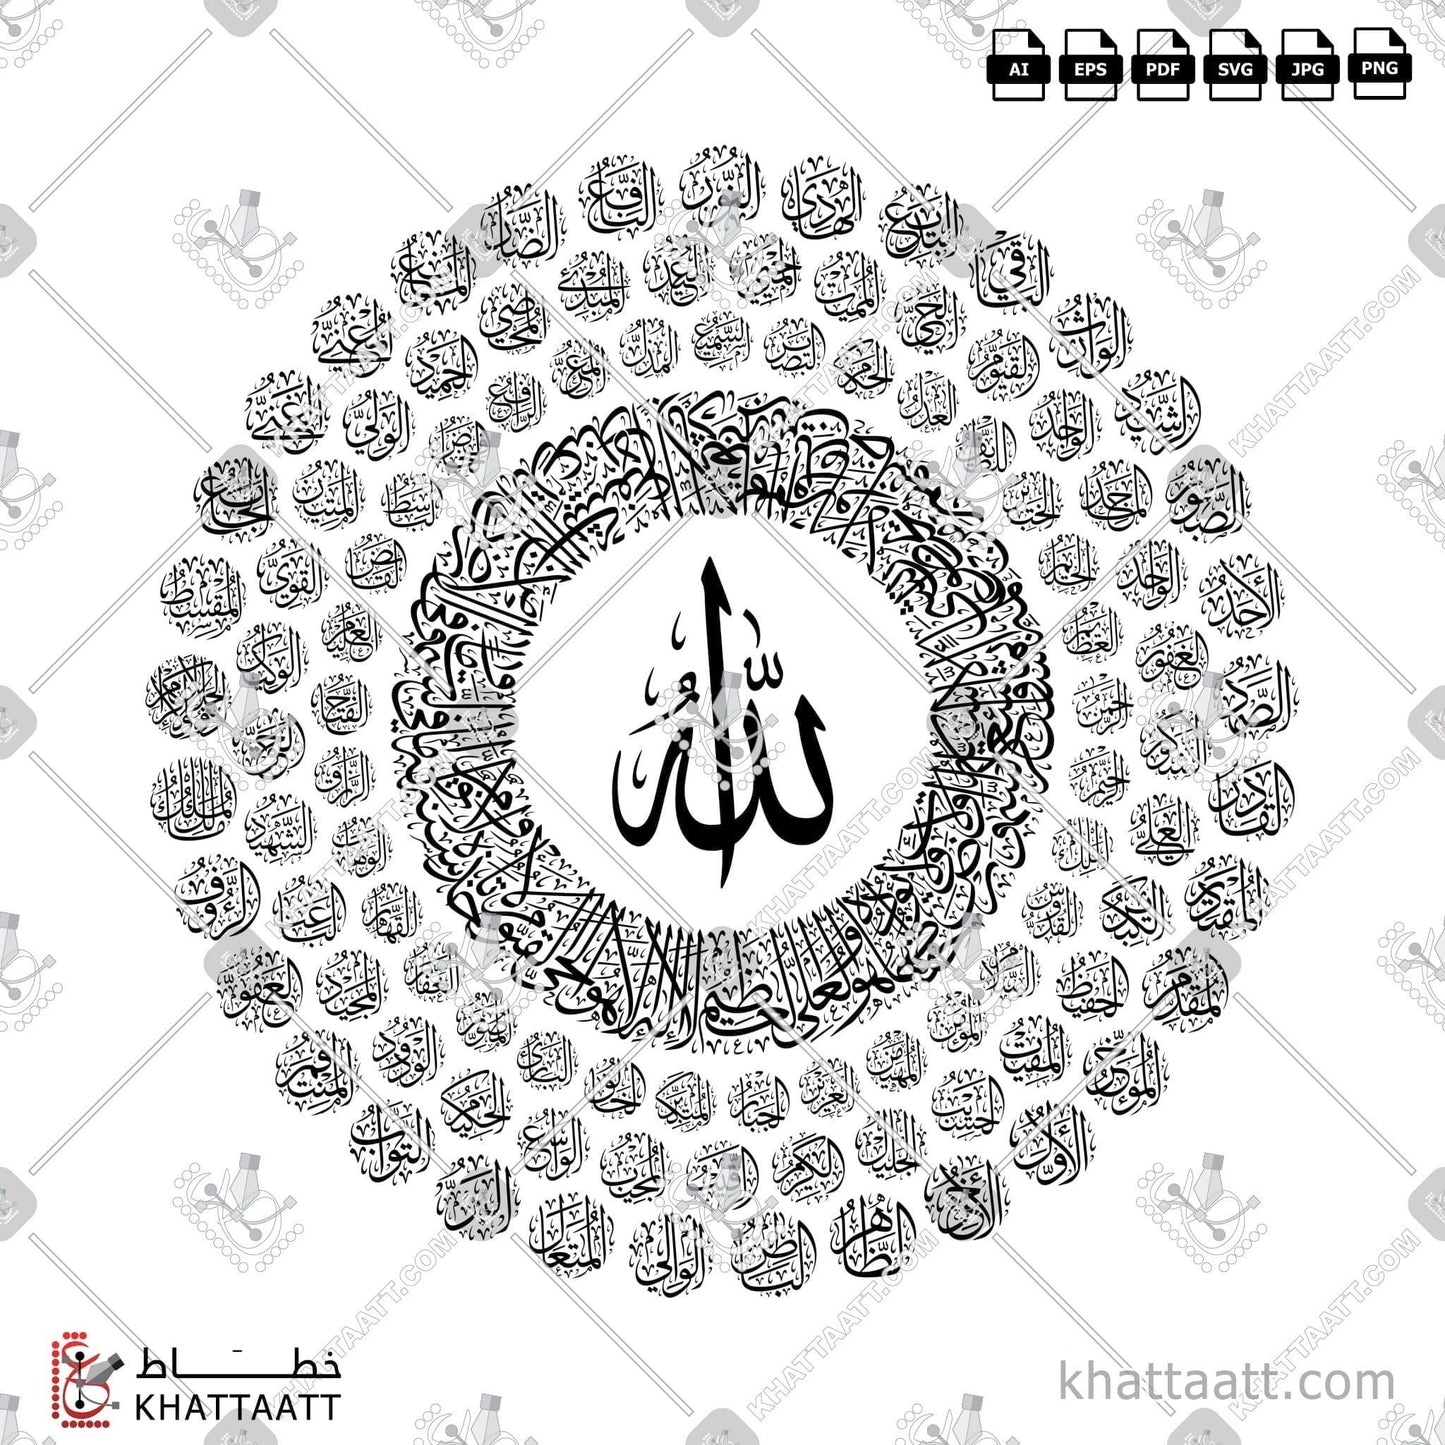 Download Arabic Calligraphy of آية الكرسي مع أسماء الله الحسنى in Thuluth - خط الثلث in vector and .png